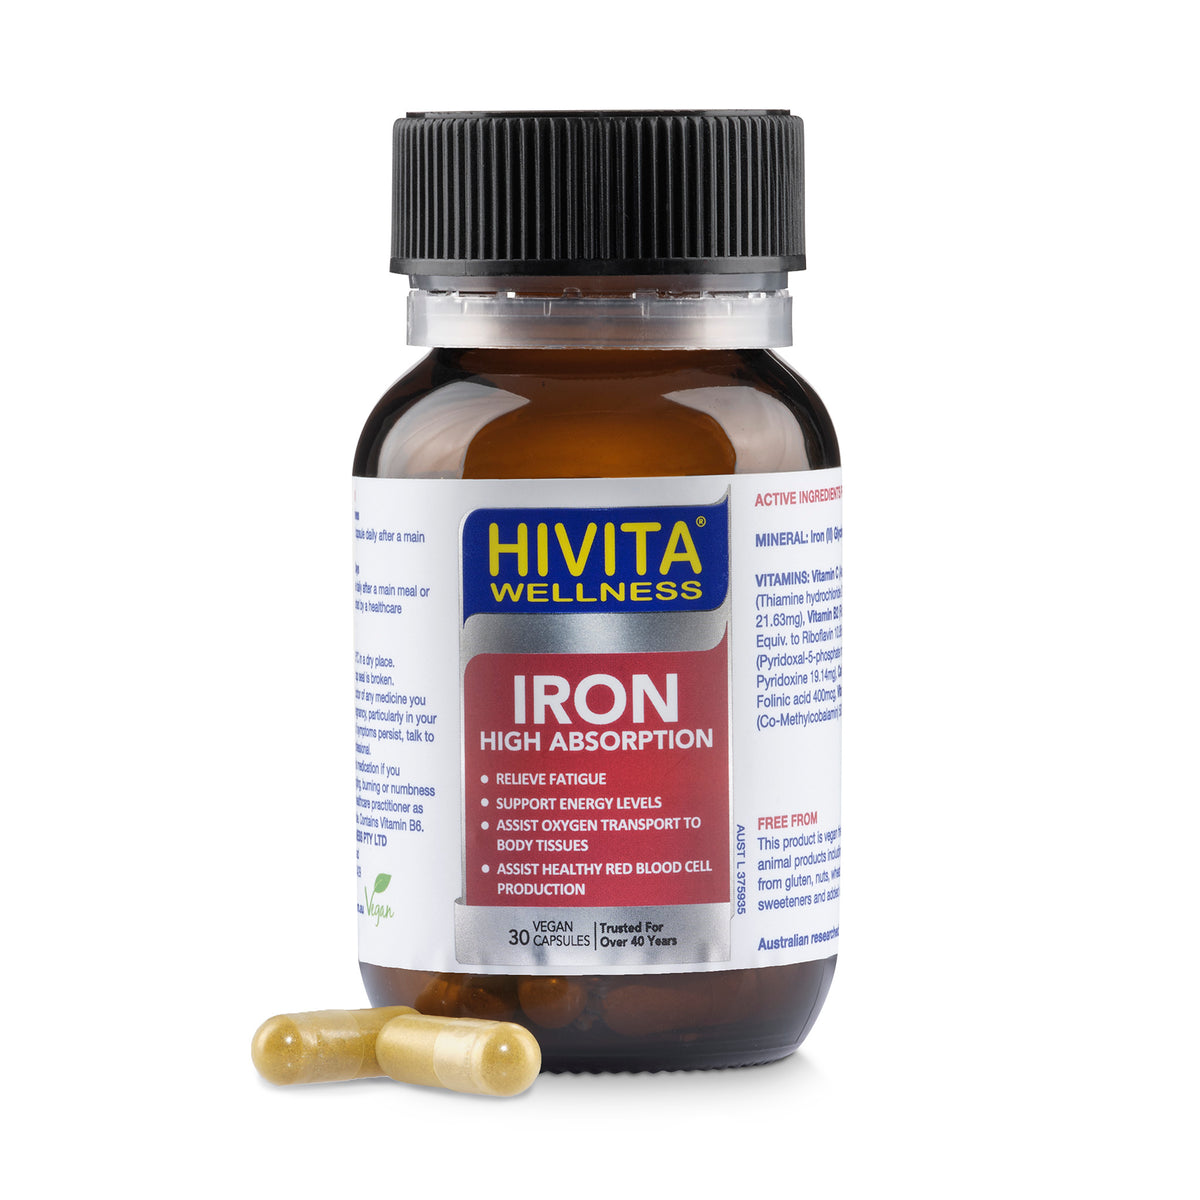 HIVITA Wellness Iron High Absorption 30 capsules